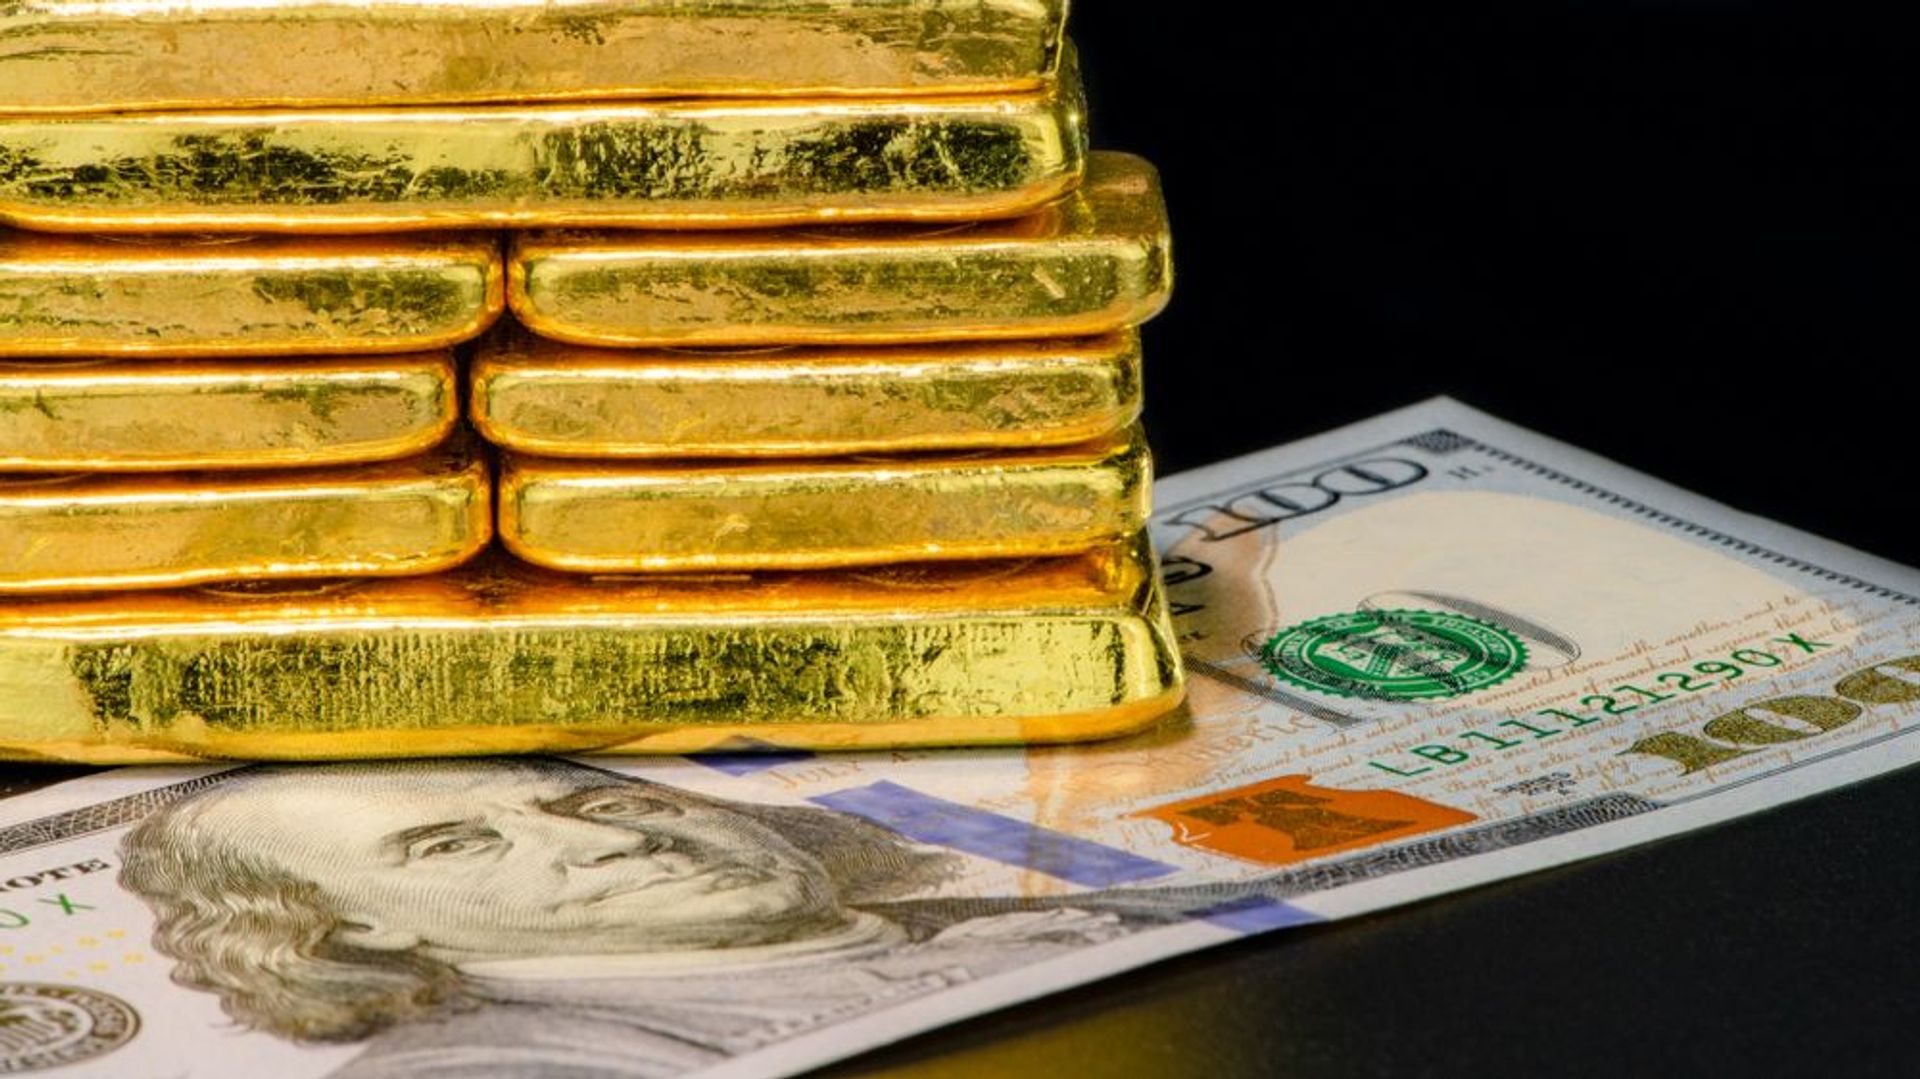 Золото доллар форум. Деньги золото. Золото и доллары. Золотой доллар. Слиток золота.